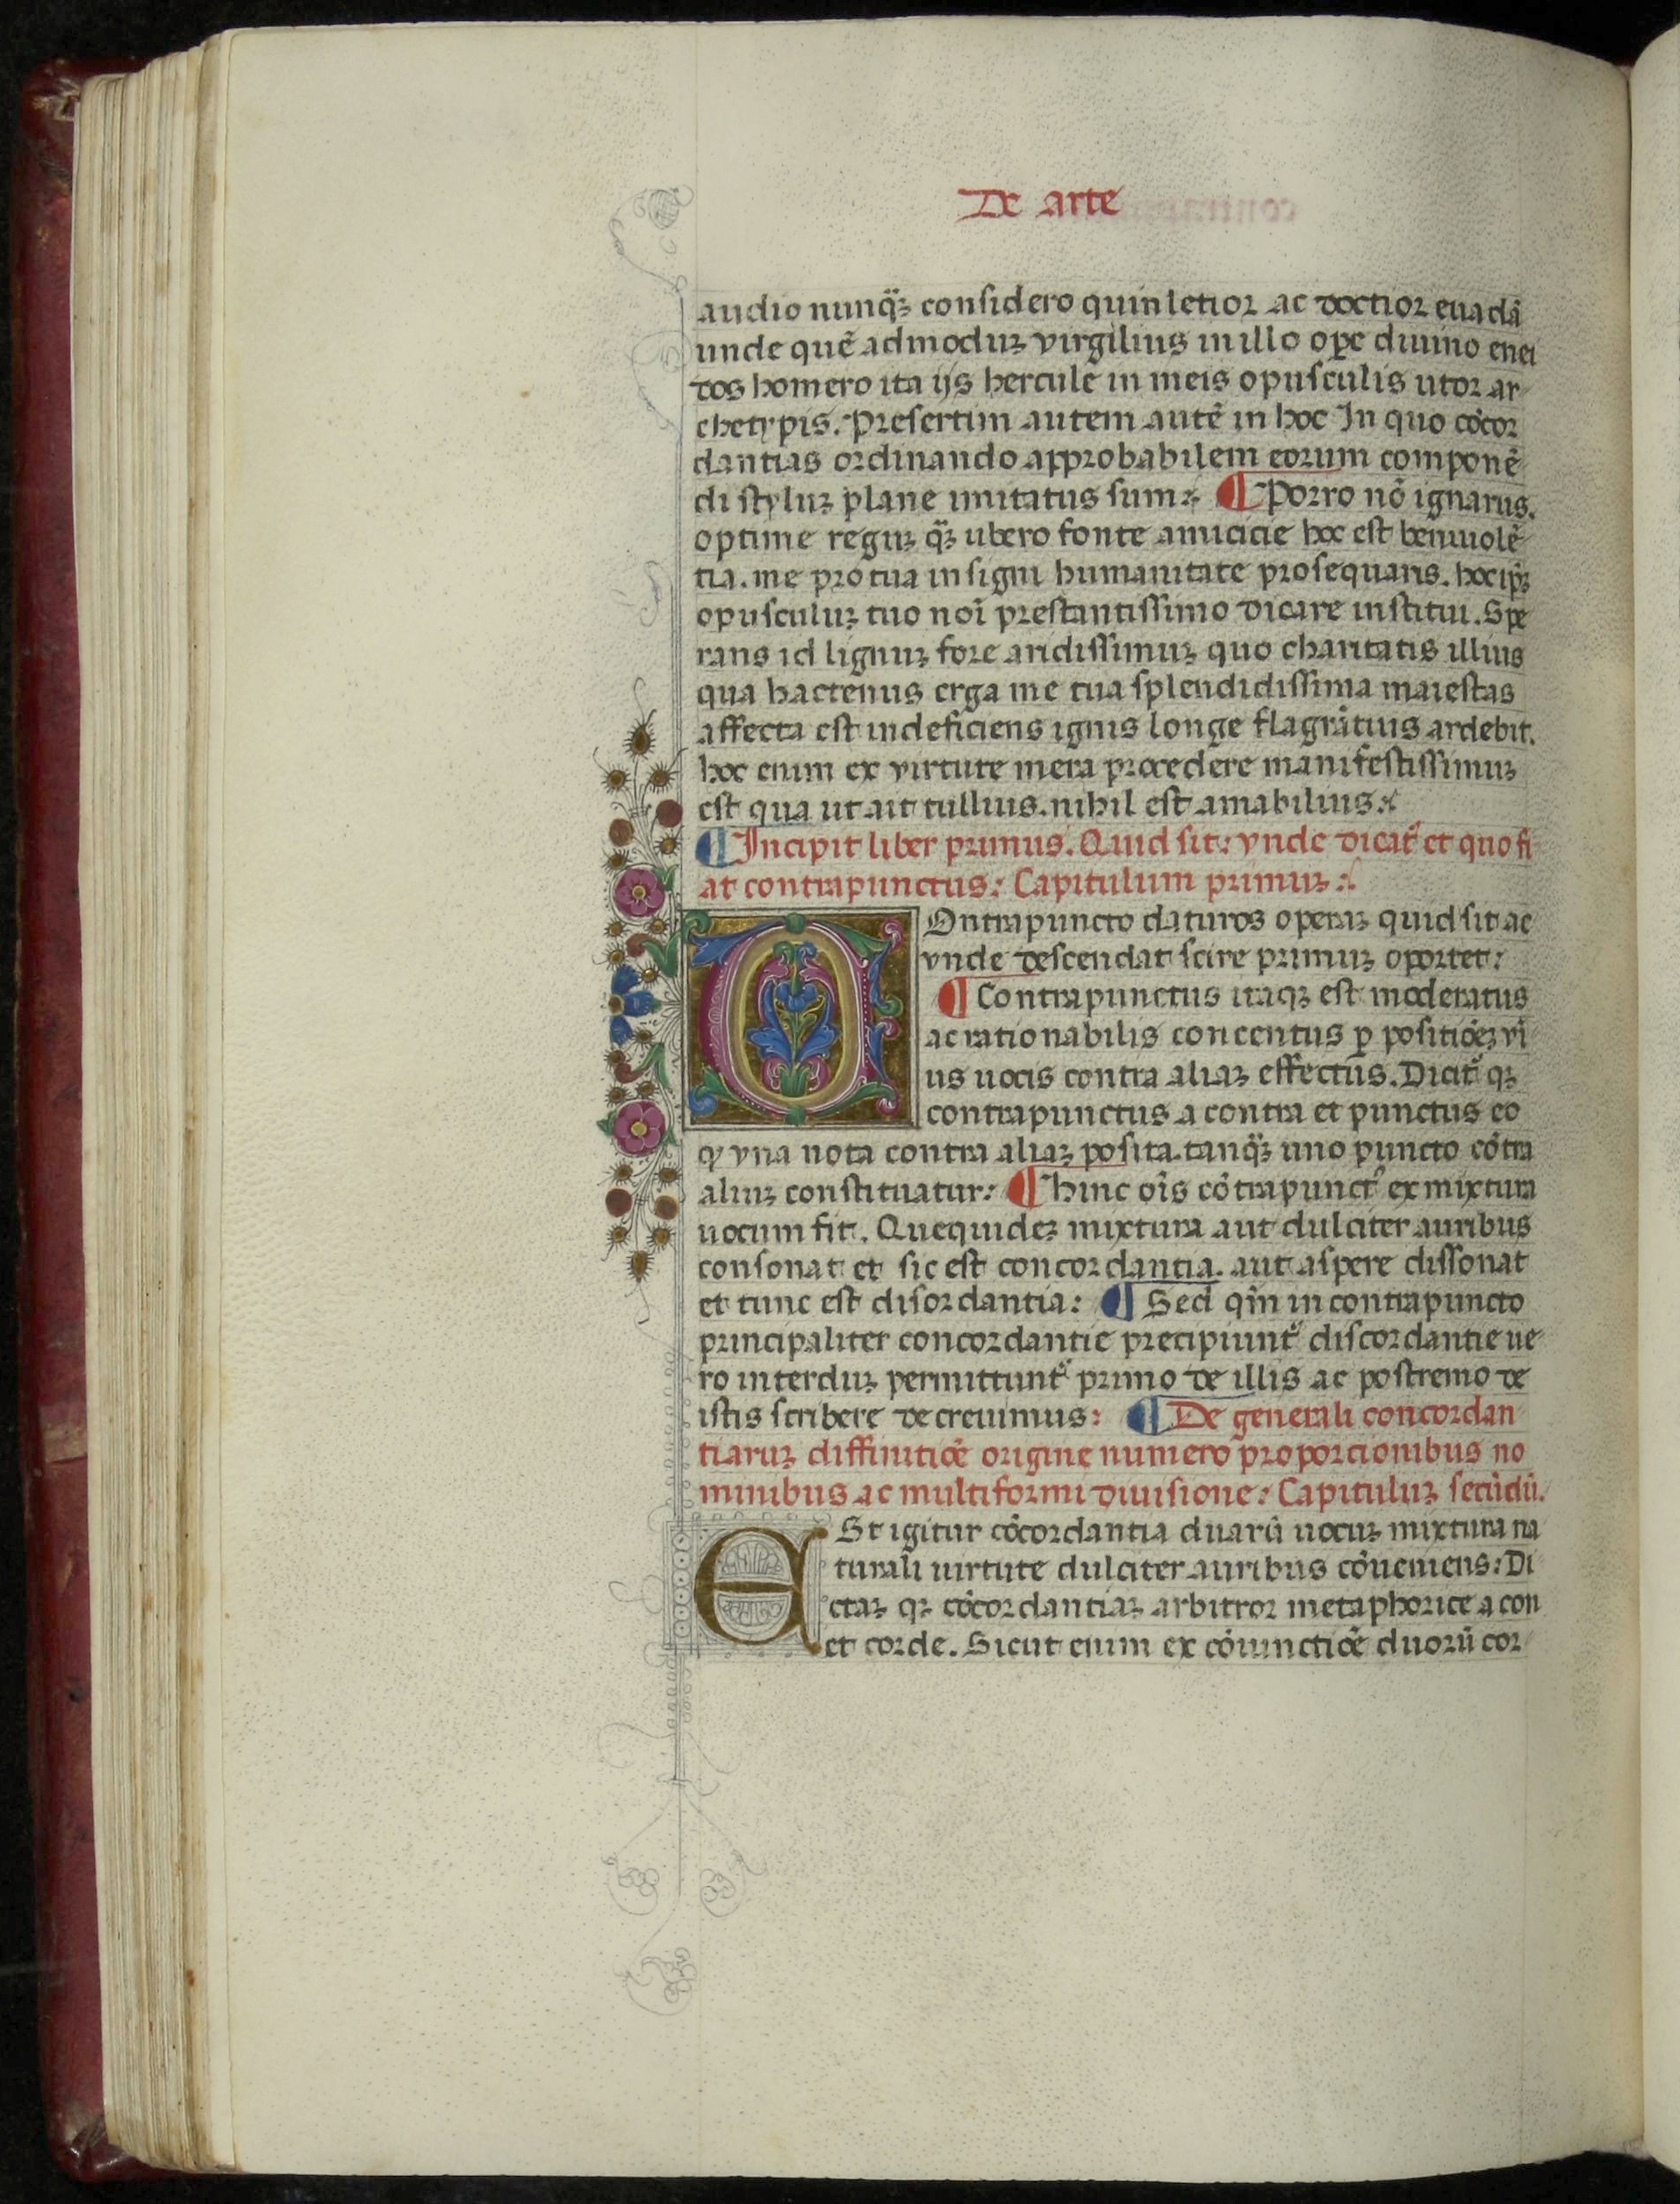 Universitat de València, Biblioteca Històrica, MS 835 [olim 844], fol. 80v. Source: Universitat de València, Biblioteca Històrica.